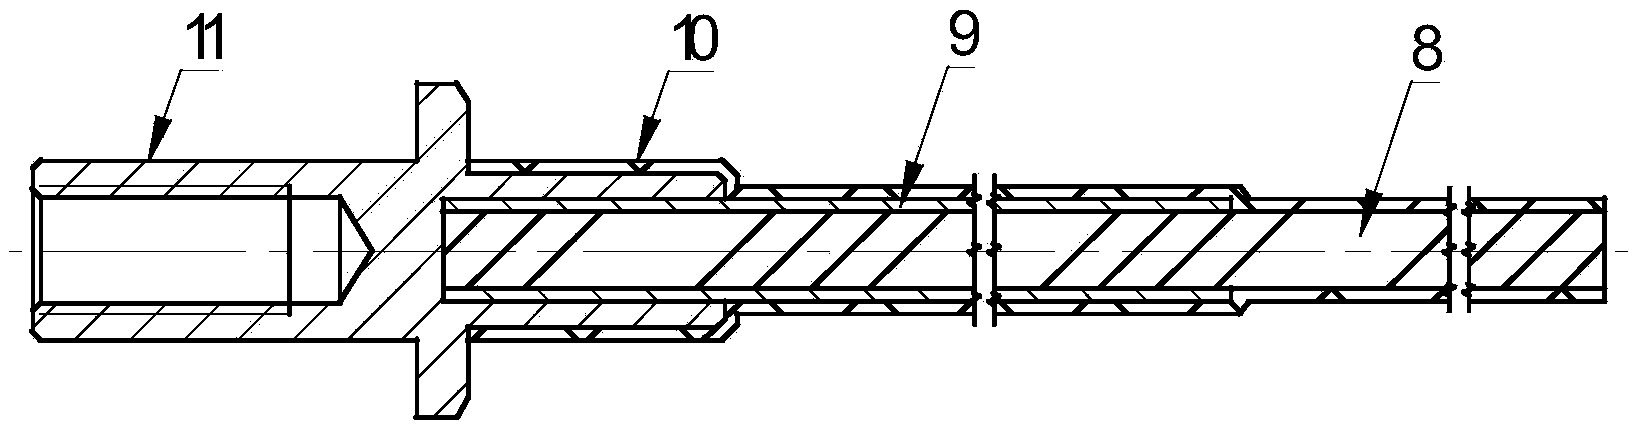 Full-automatic log periodic antenna